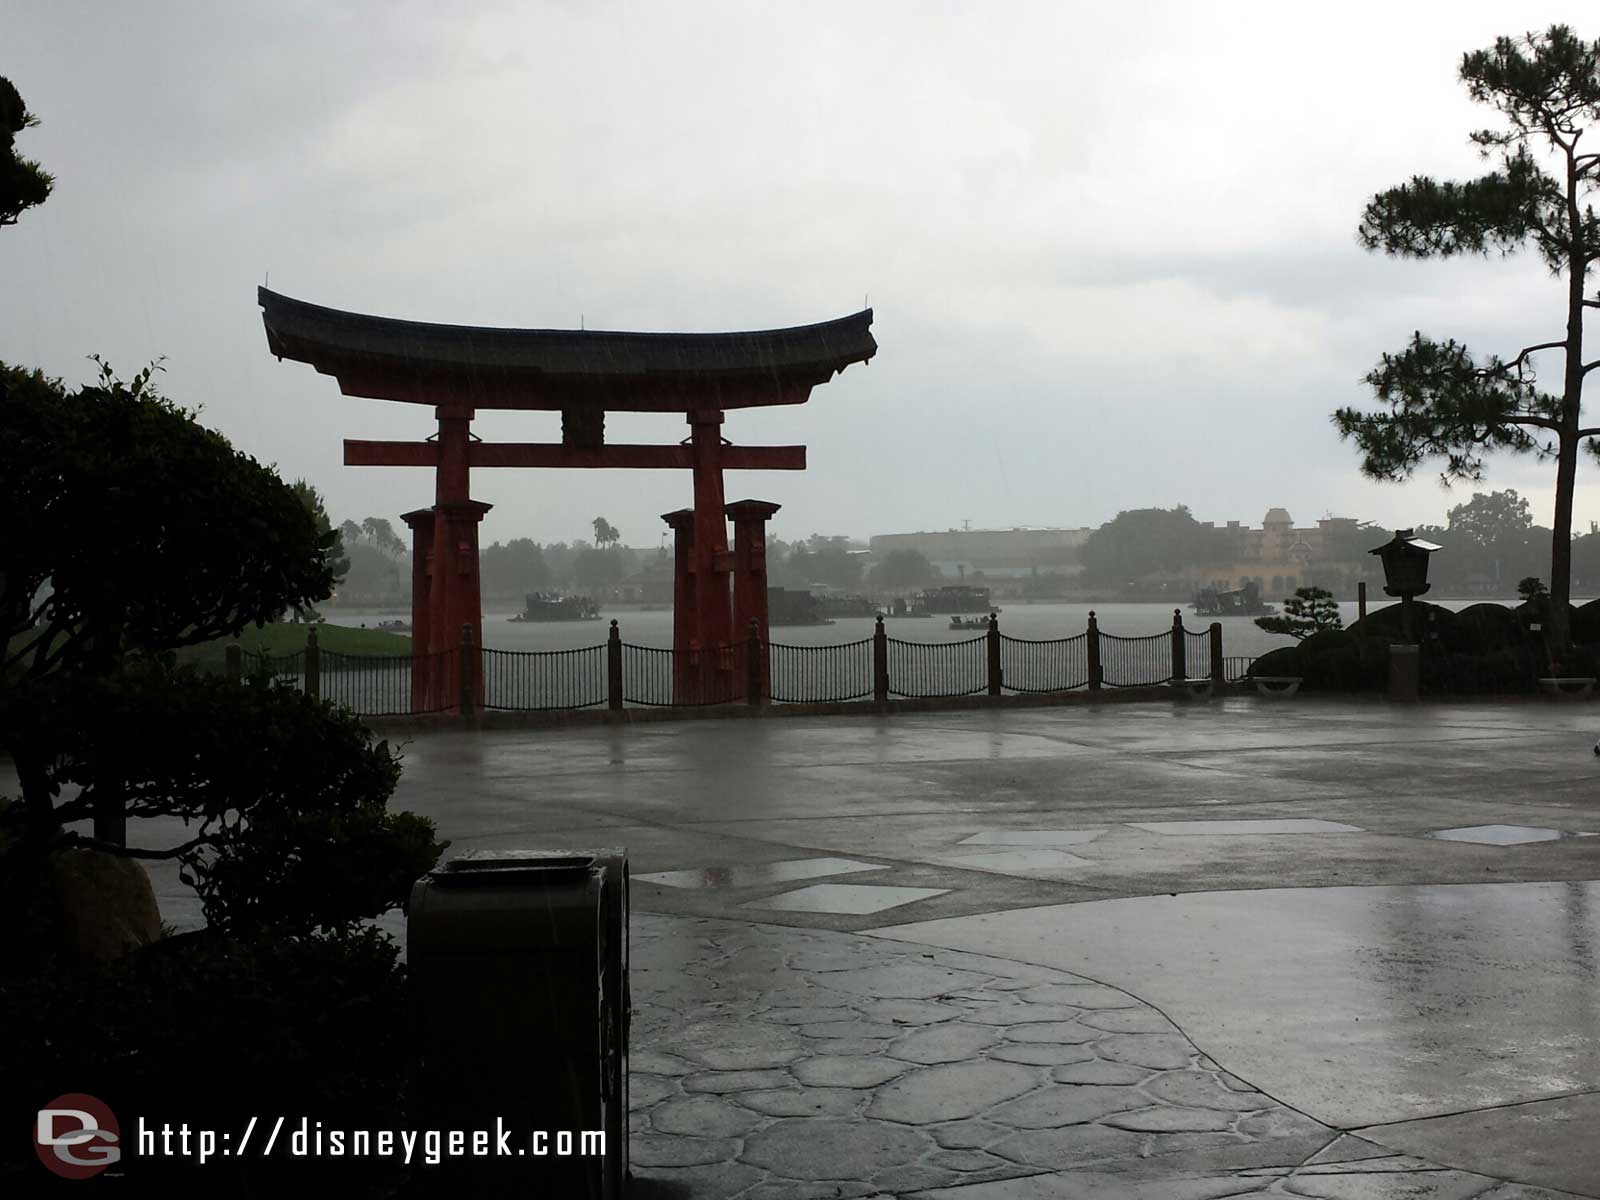 Epcot - Japan - waiting out the rain storm